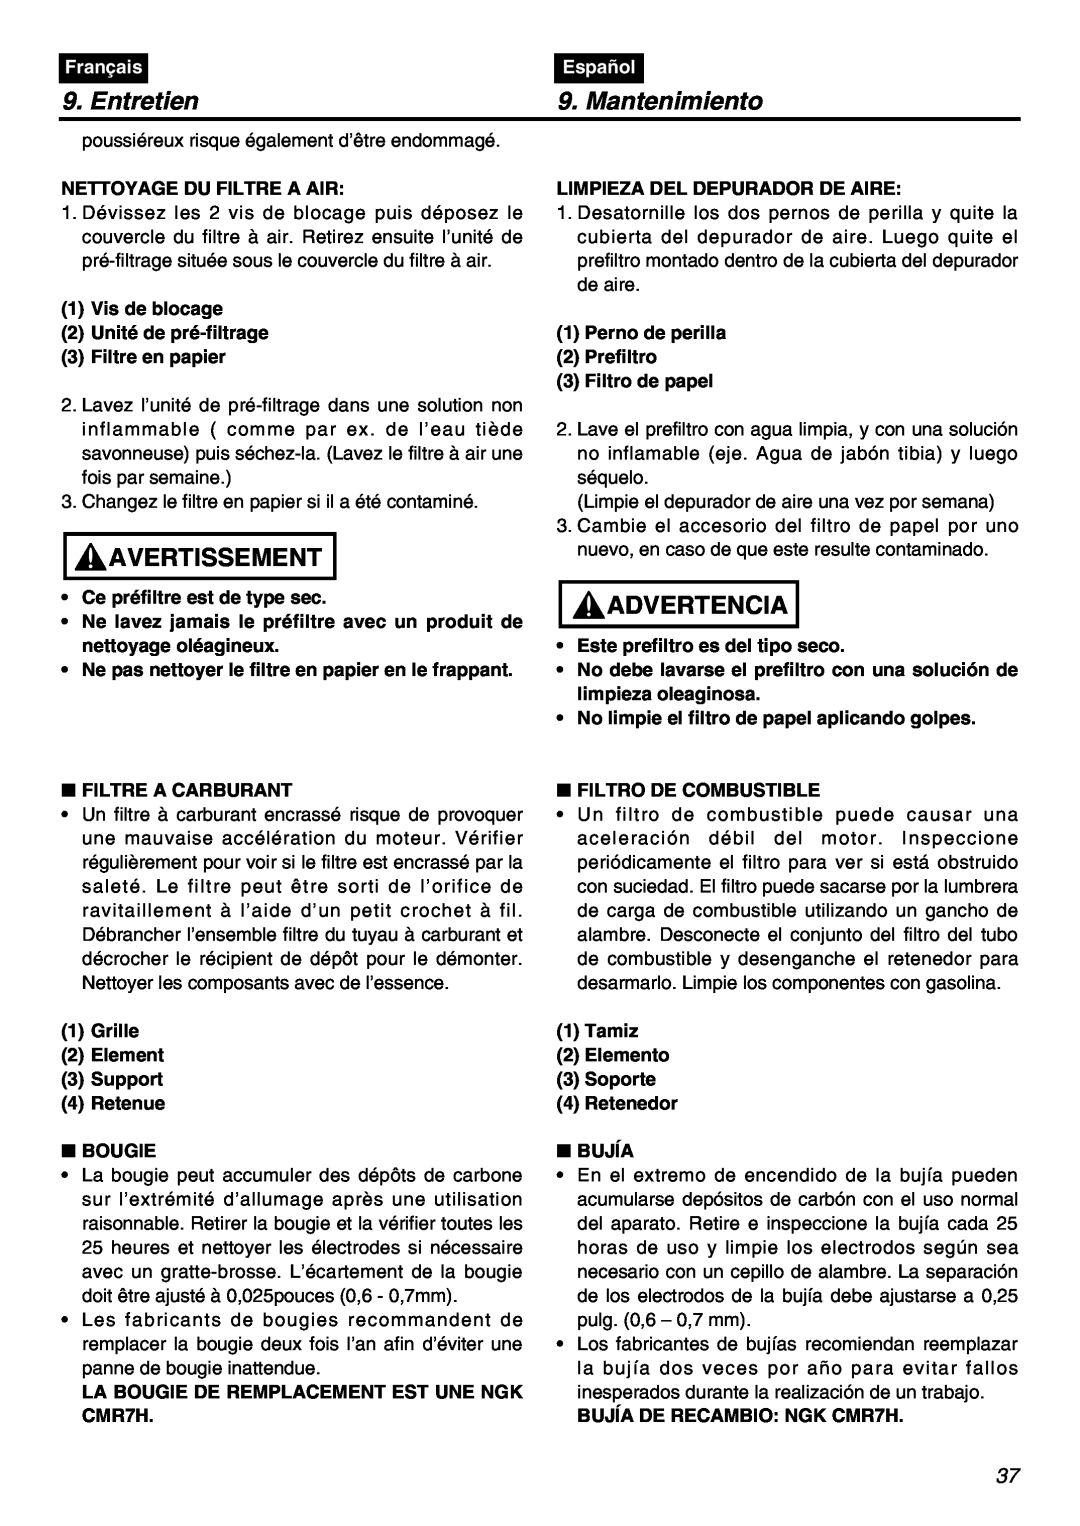 RedMax EBZ7001-CA, EBZ7001RH-CA manual Entretien, Mantenimiento, Avertissement, Advertencia, Français, Español 